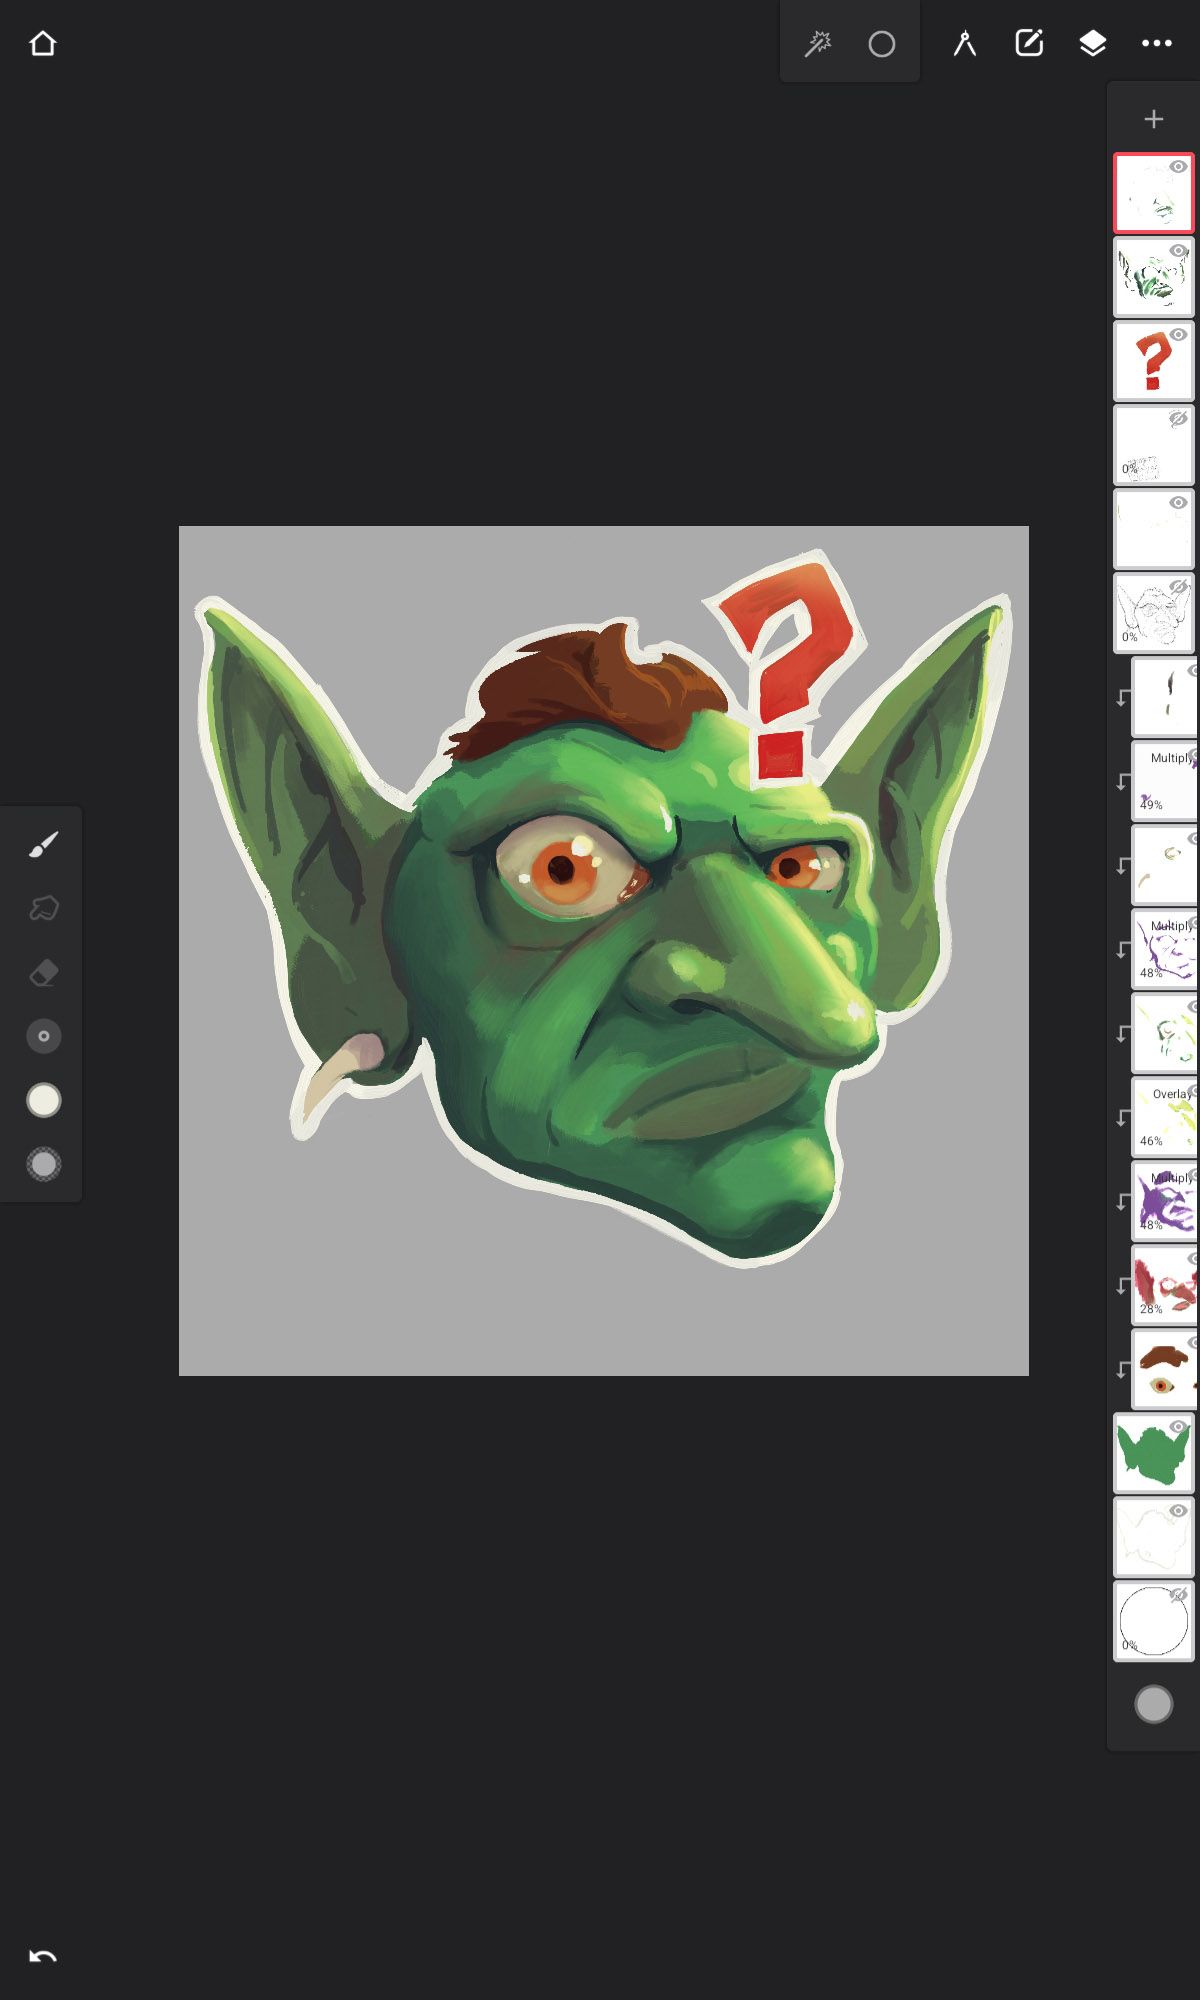 Draw goblin stickers in Infinite Painter.